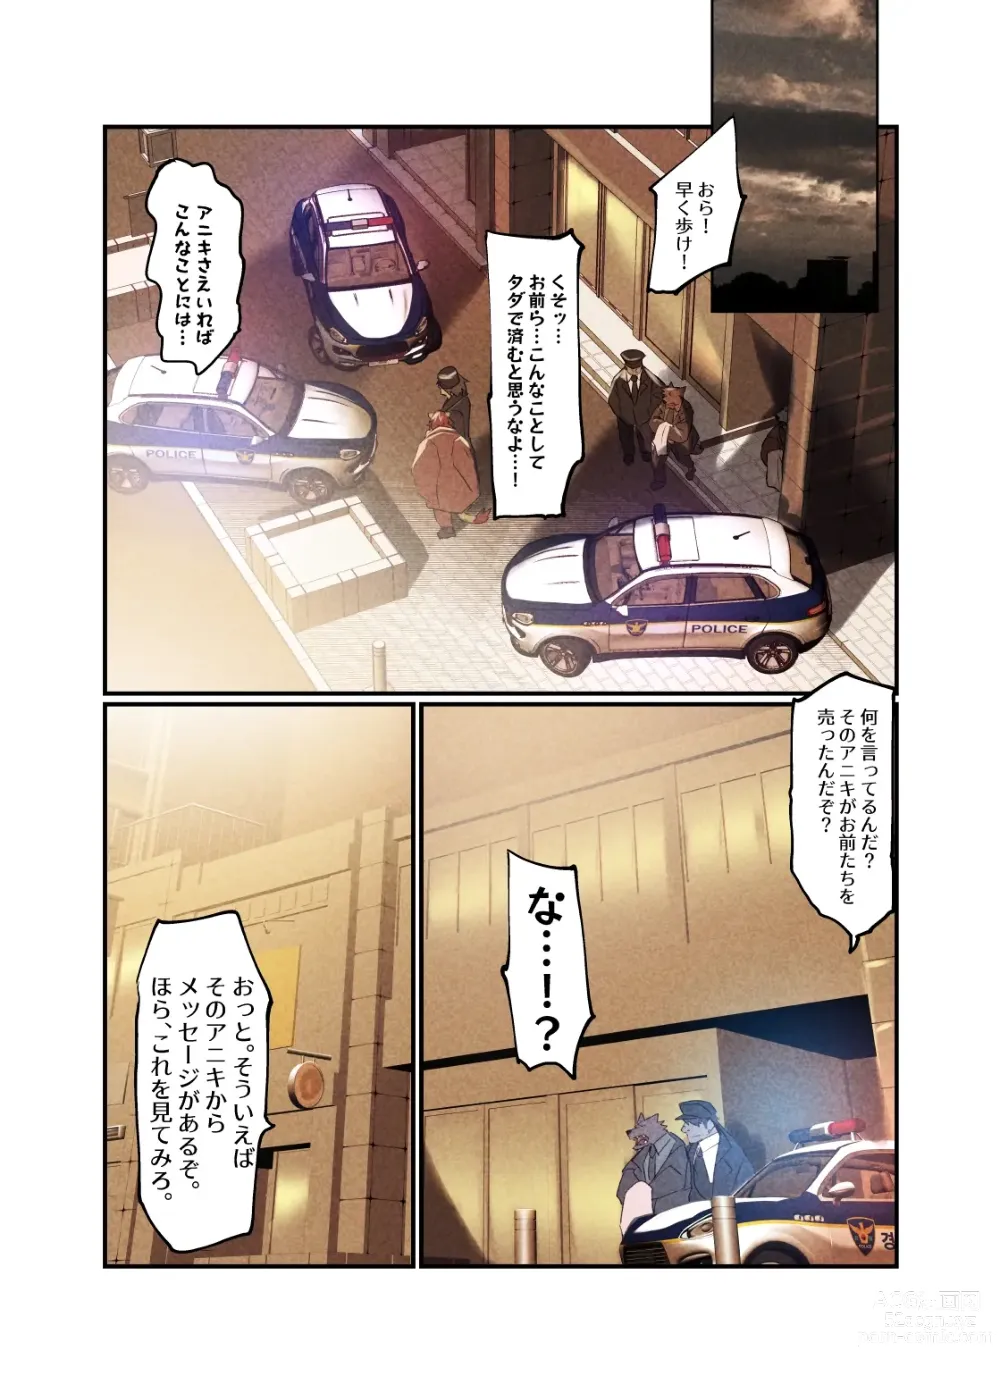 Page 23 of doujinshi NEVER SURRENDER